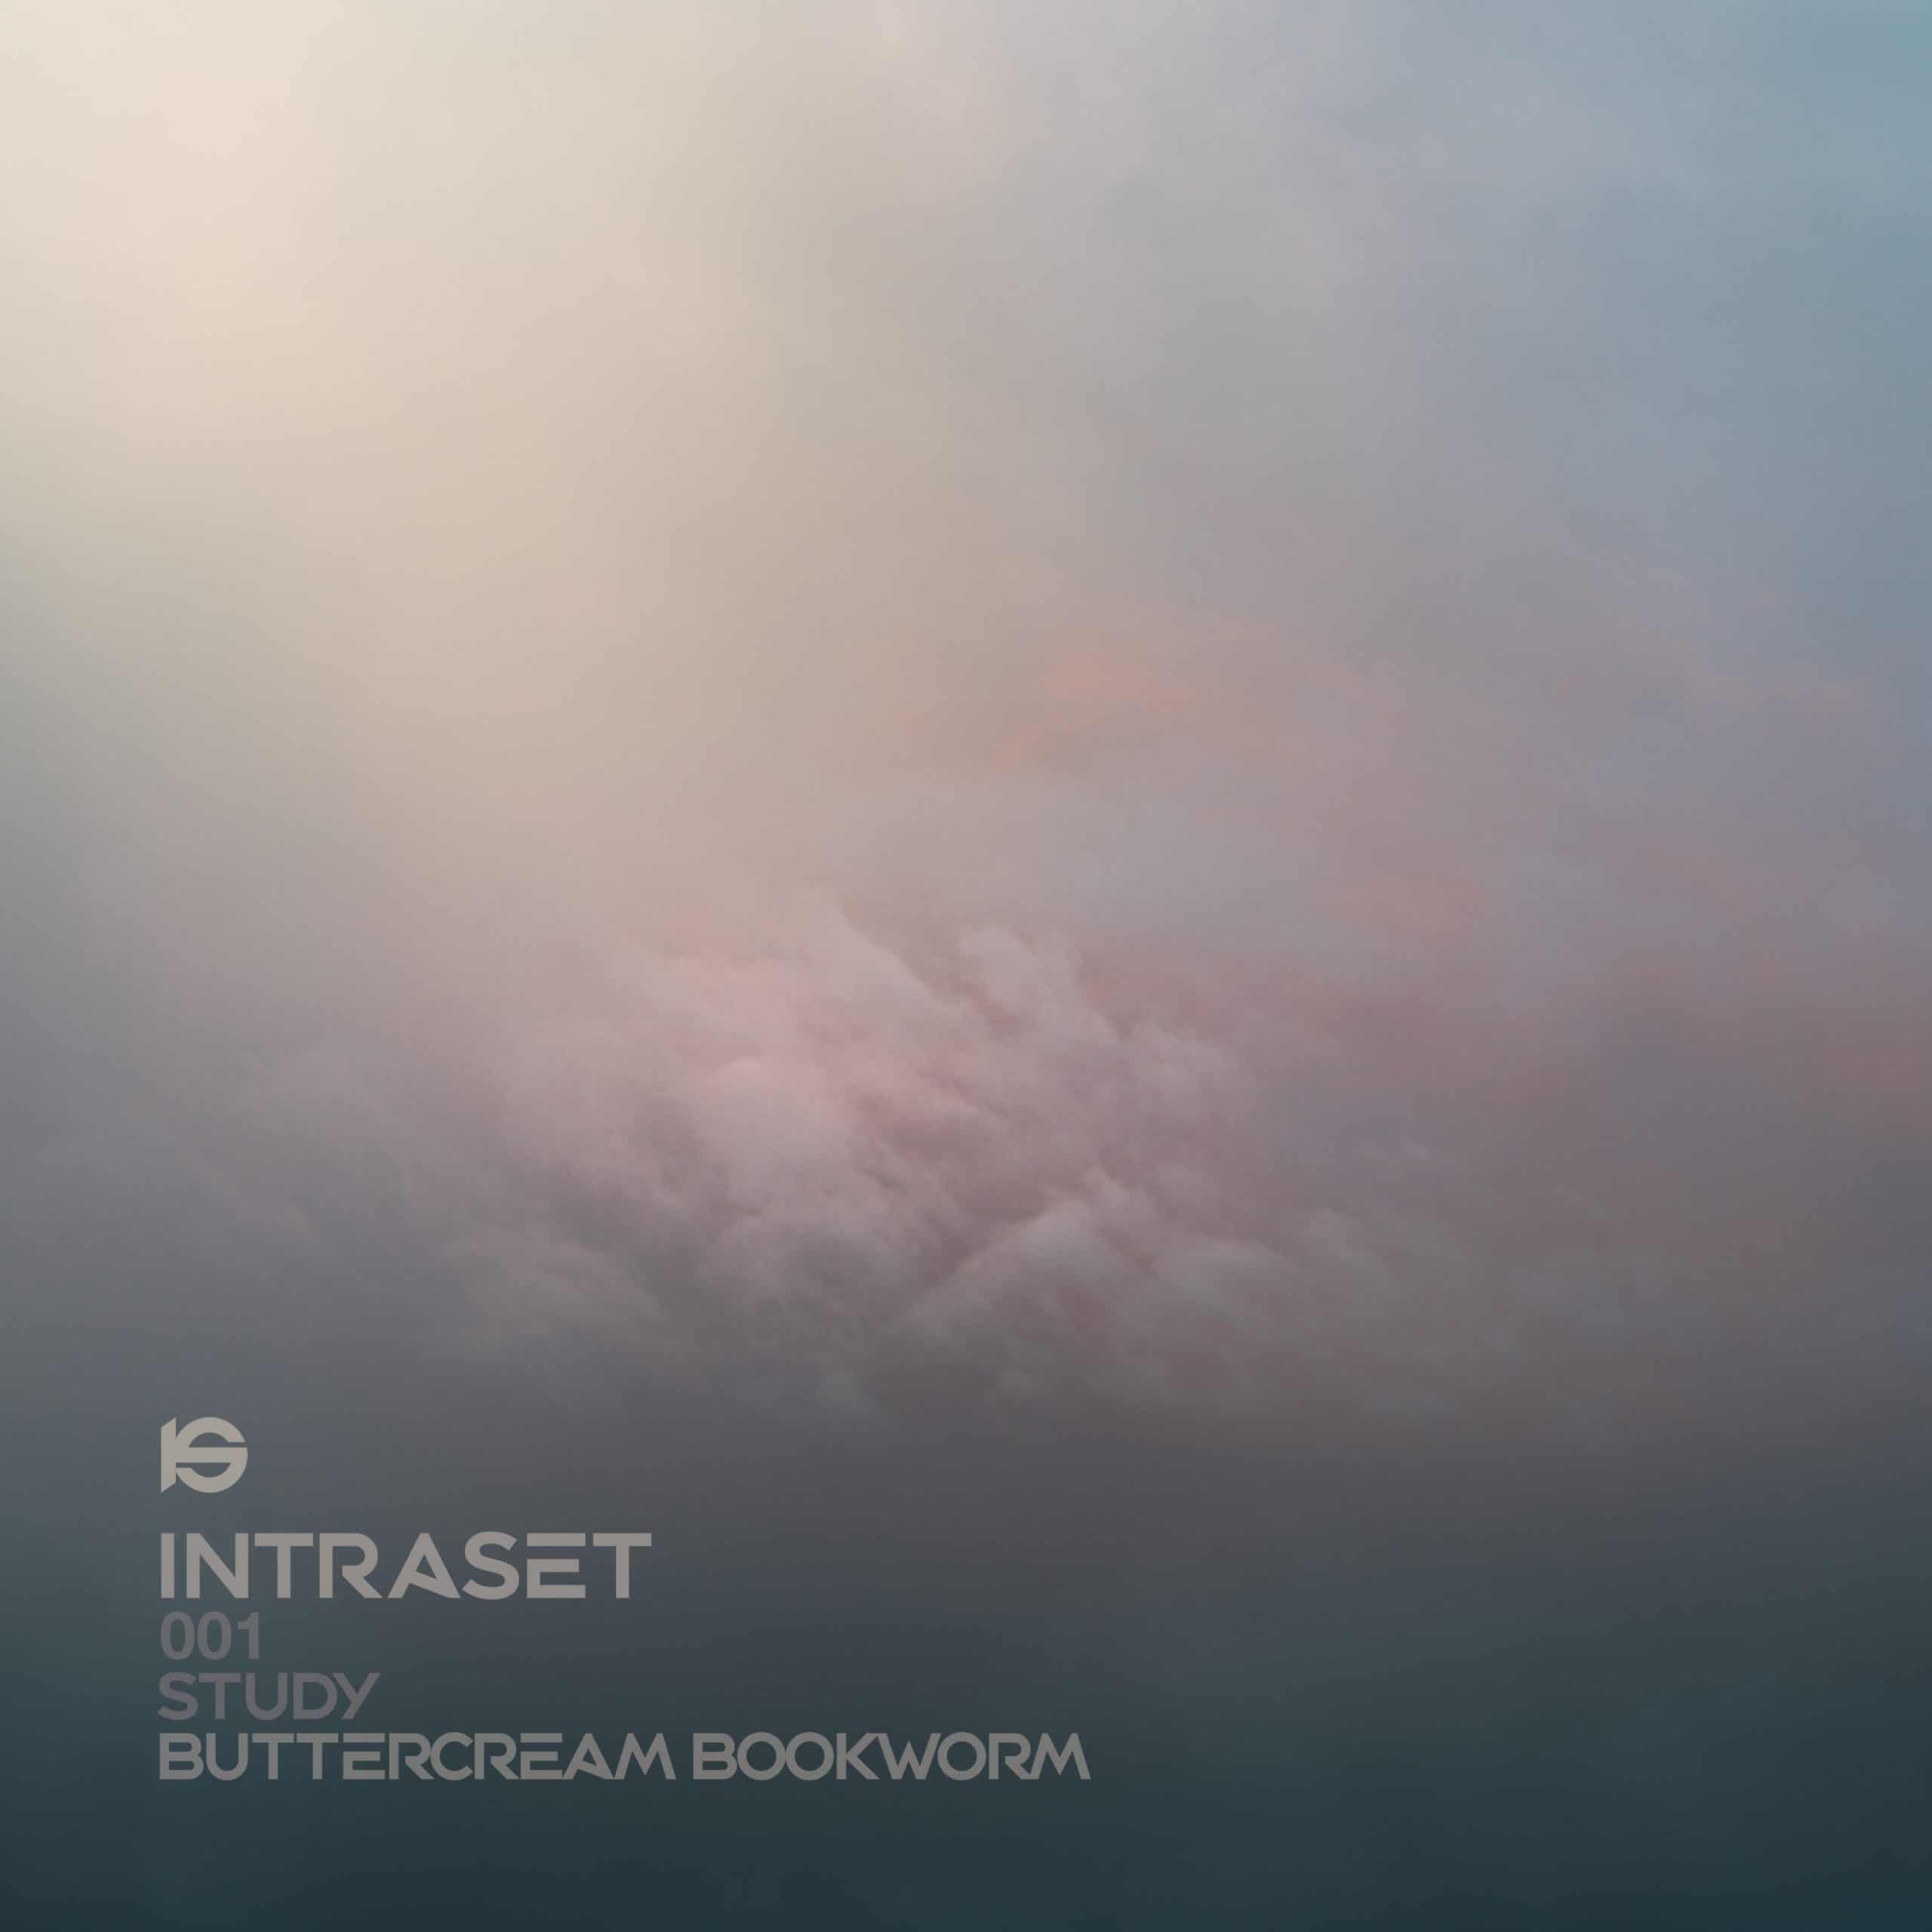 Letsko, Maxina & Teset team up for soothing ‘Buttercream Bookworm’ compilation